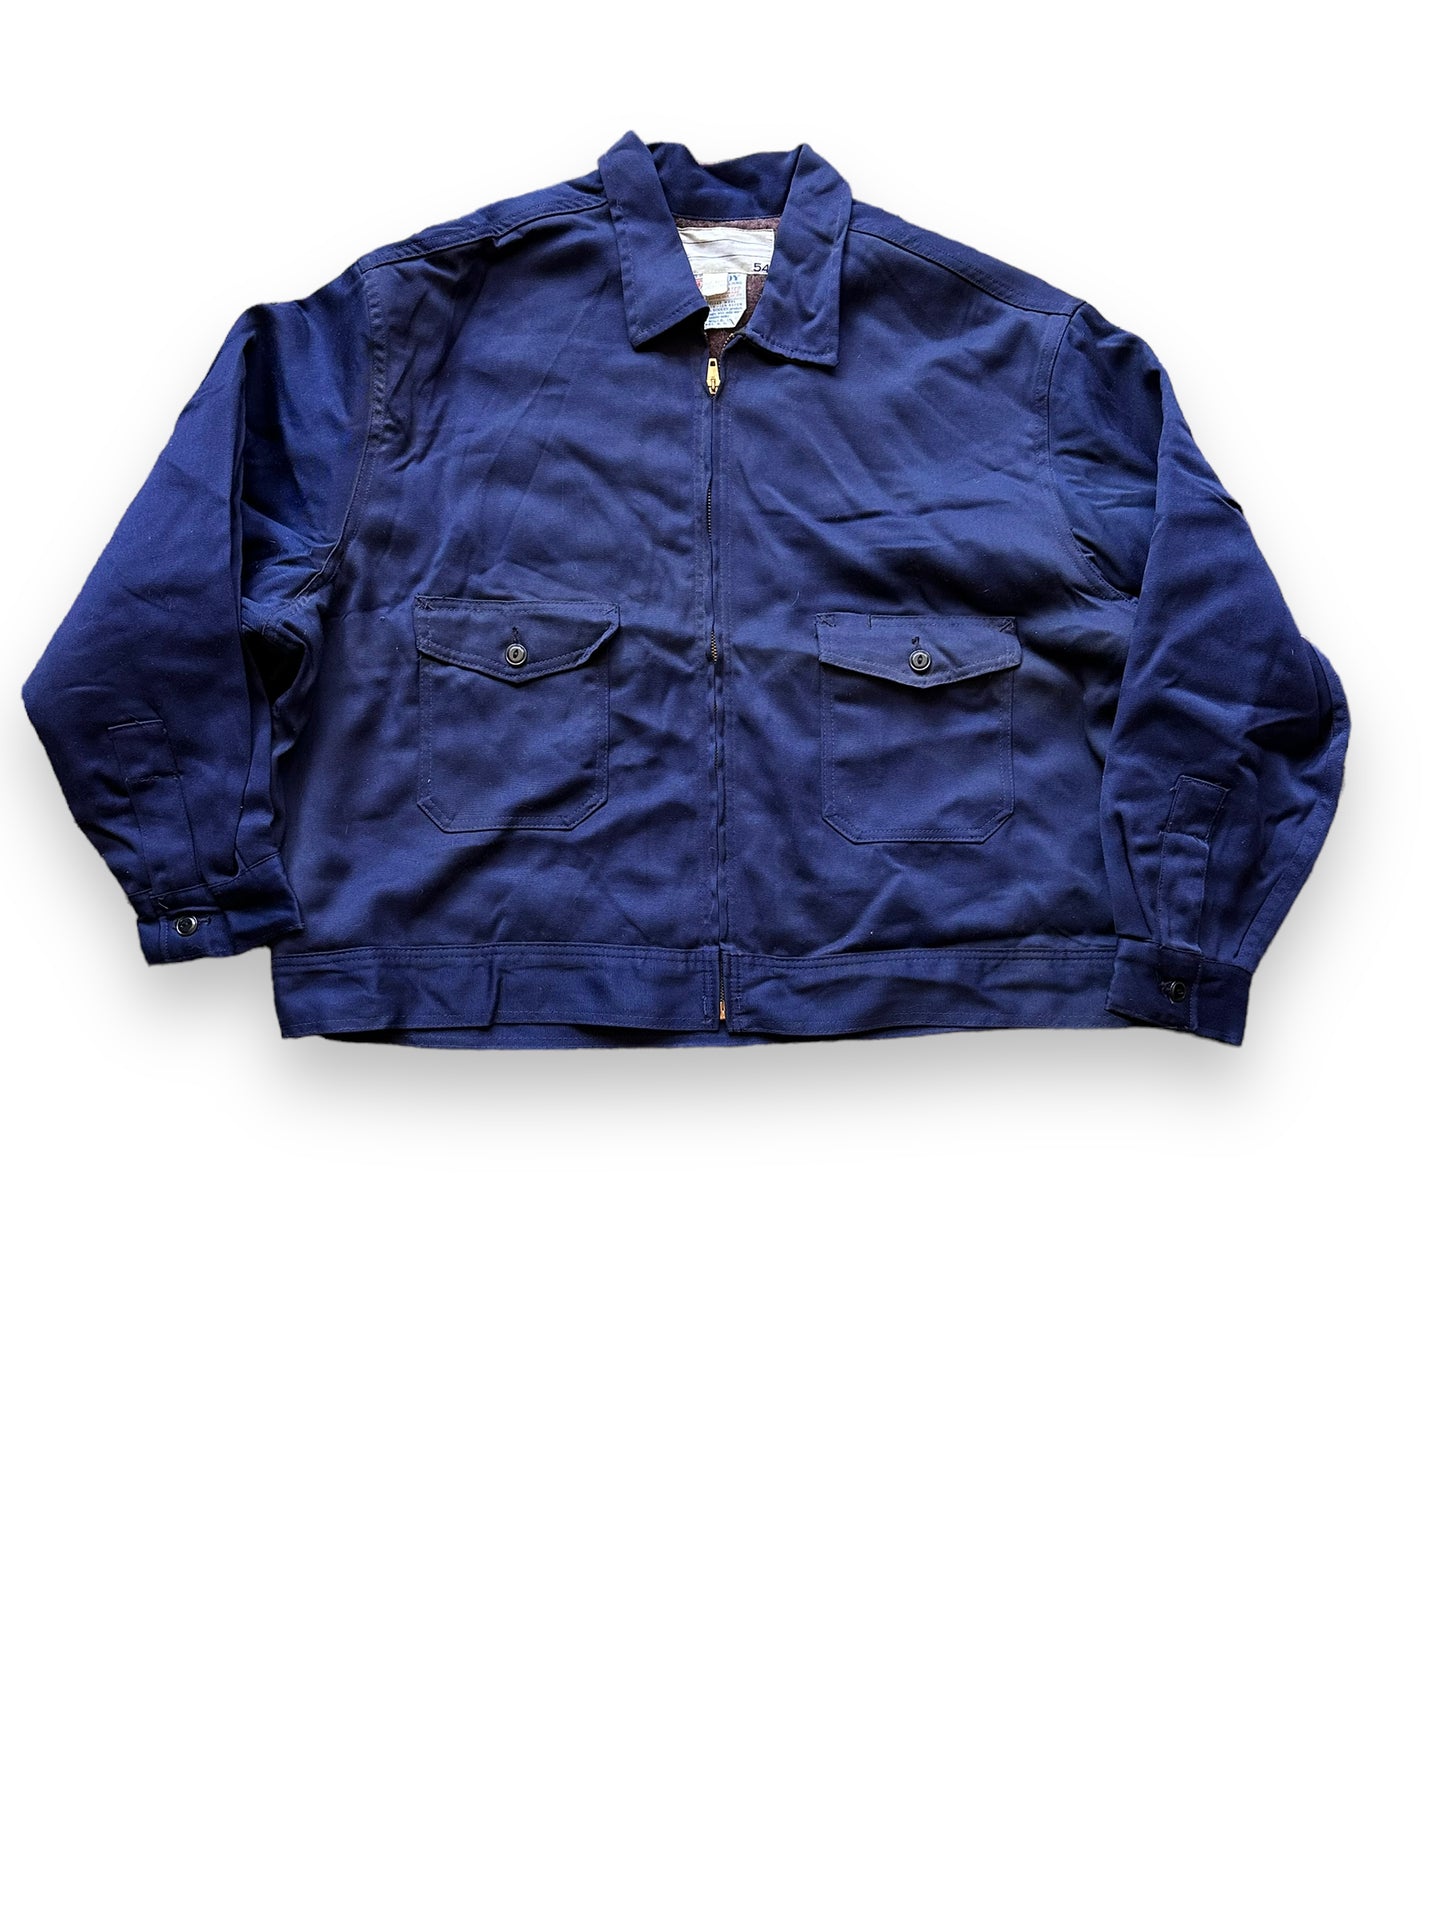 Front View of Vintage Blue Troy Blanket Lined Gas Station Jacket SZ 54 | Vintage Workwear Jacket Seattle | Seattle Vintage Clothing